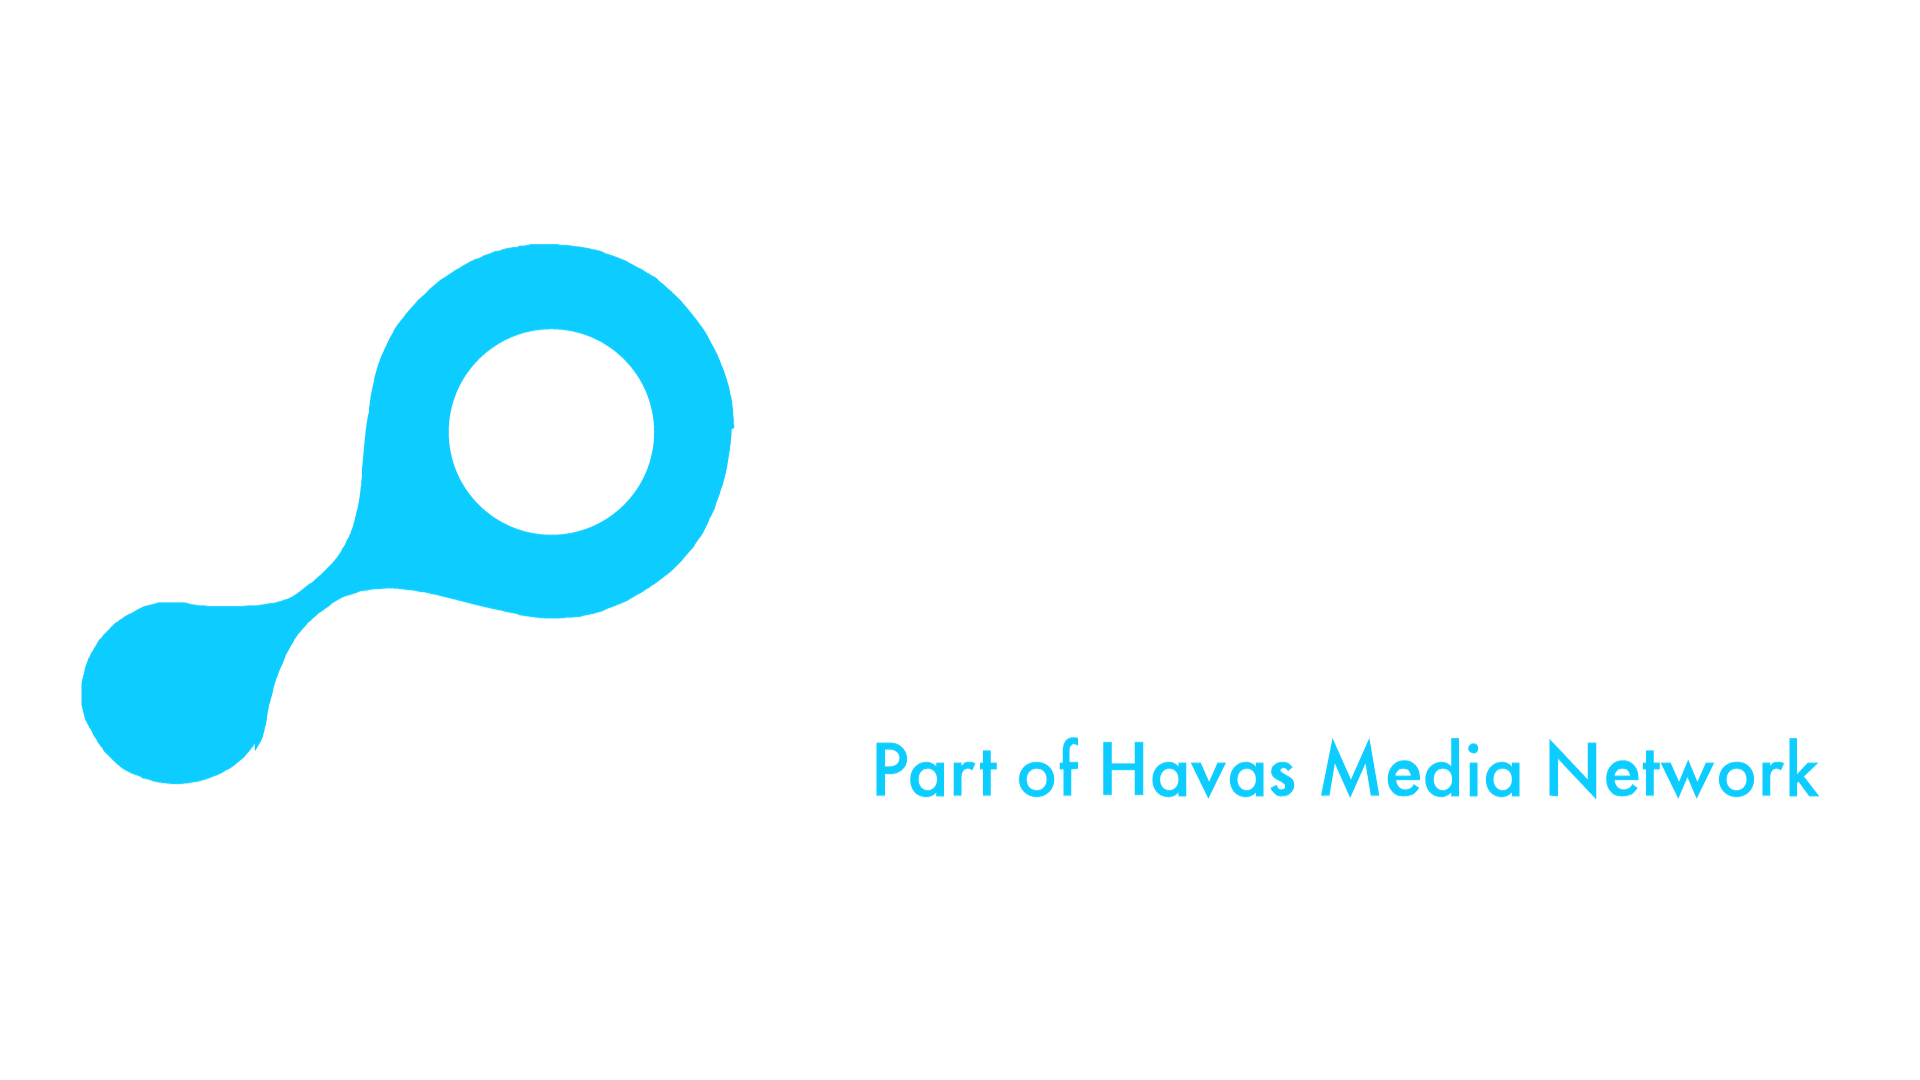 Search Laboratory Logo